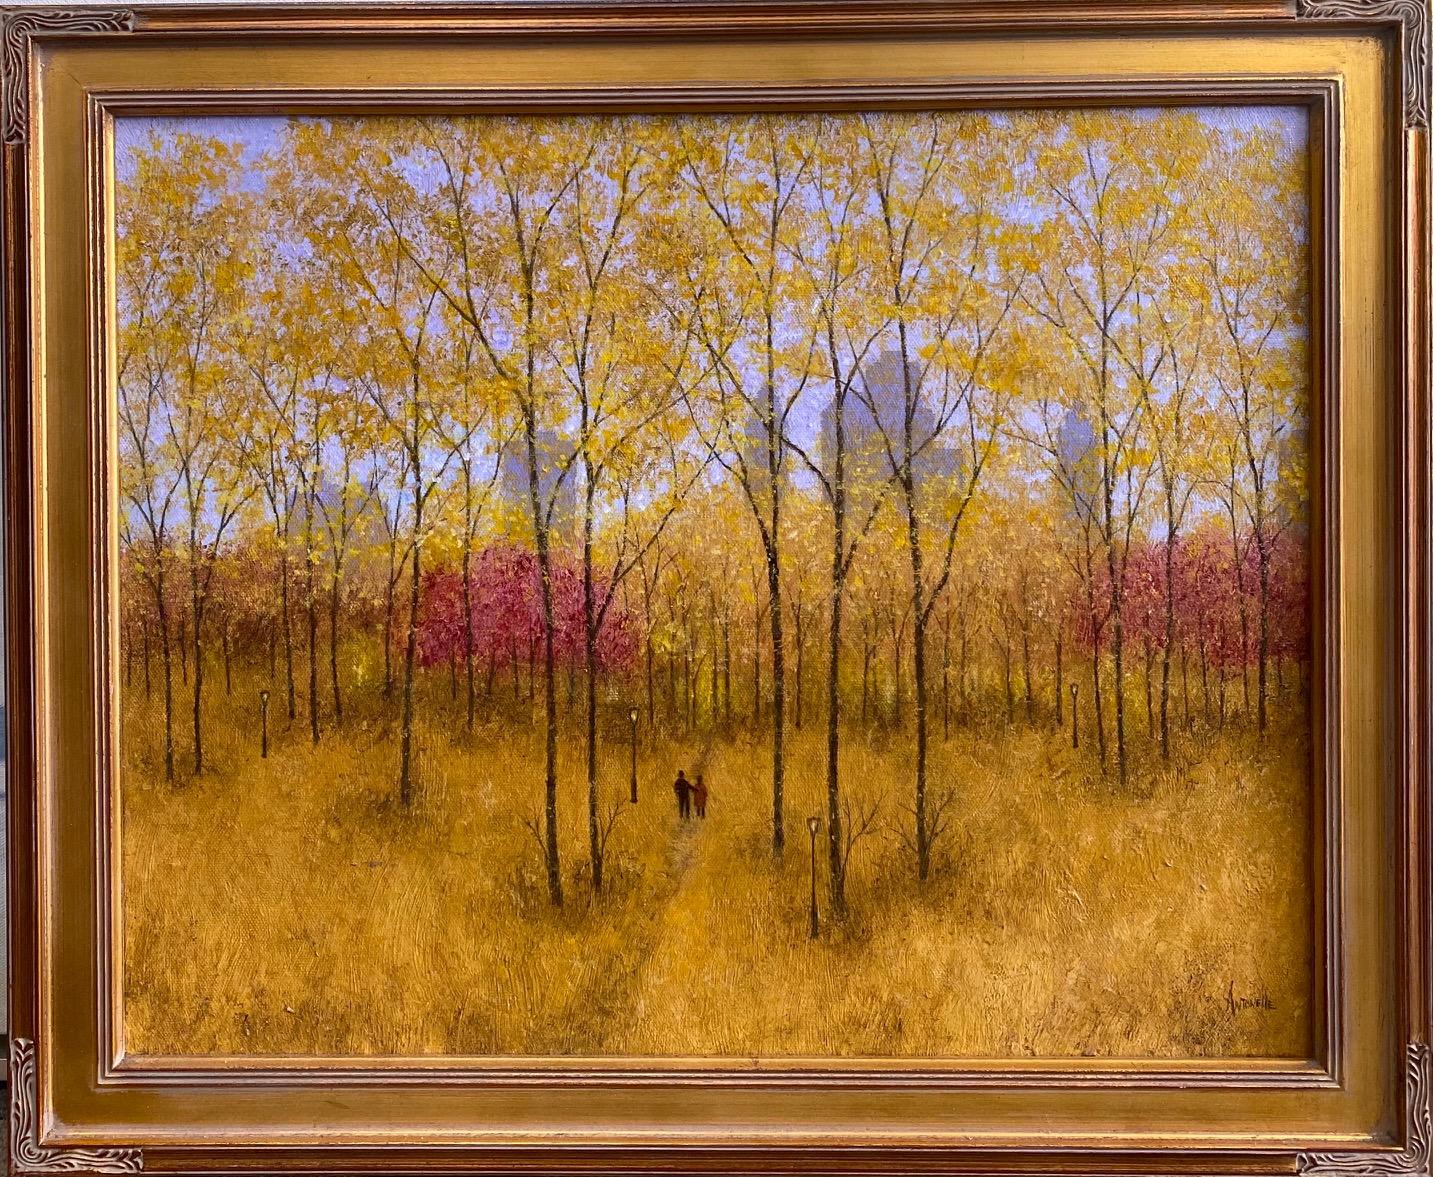 Patrick Antonelle Landscape Painting - Autumn Stroll II, original contemporary NYC landscape